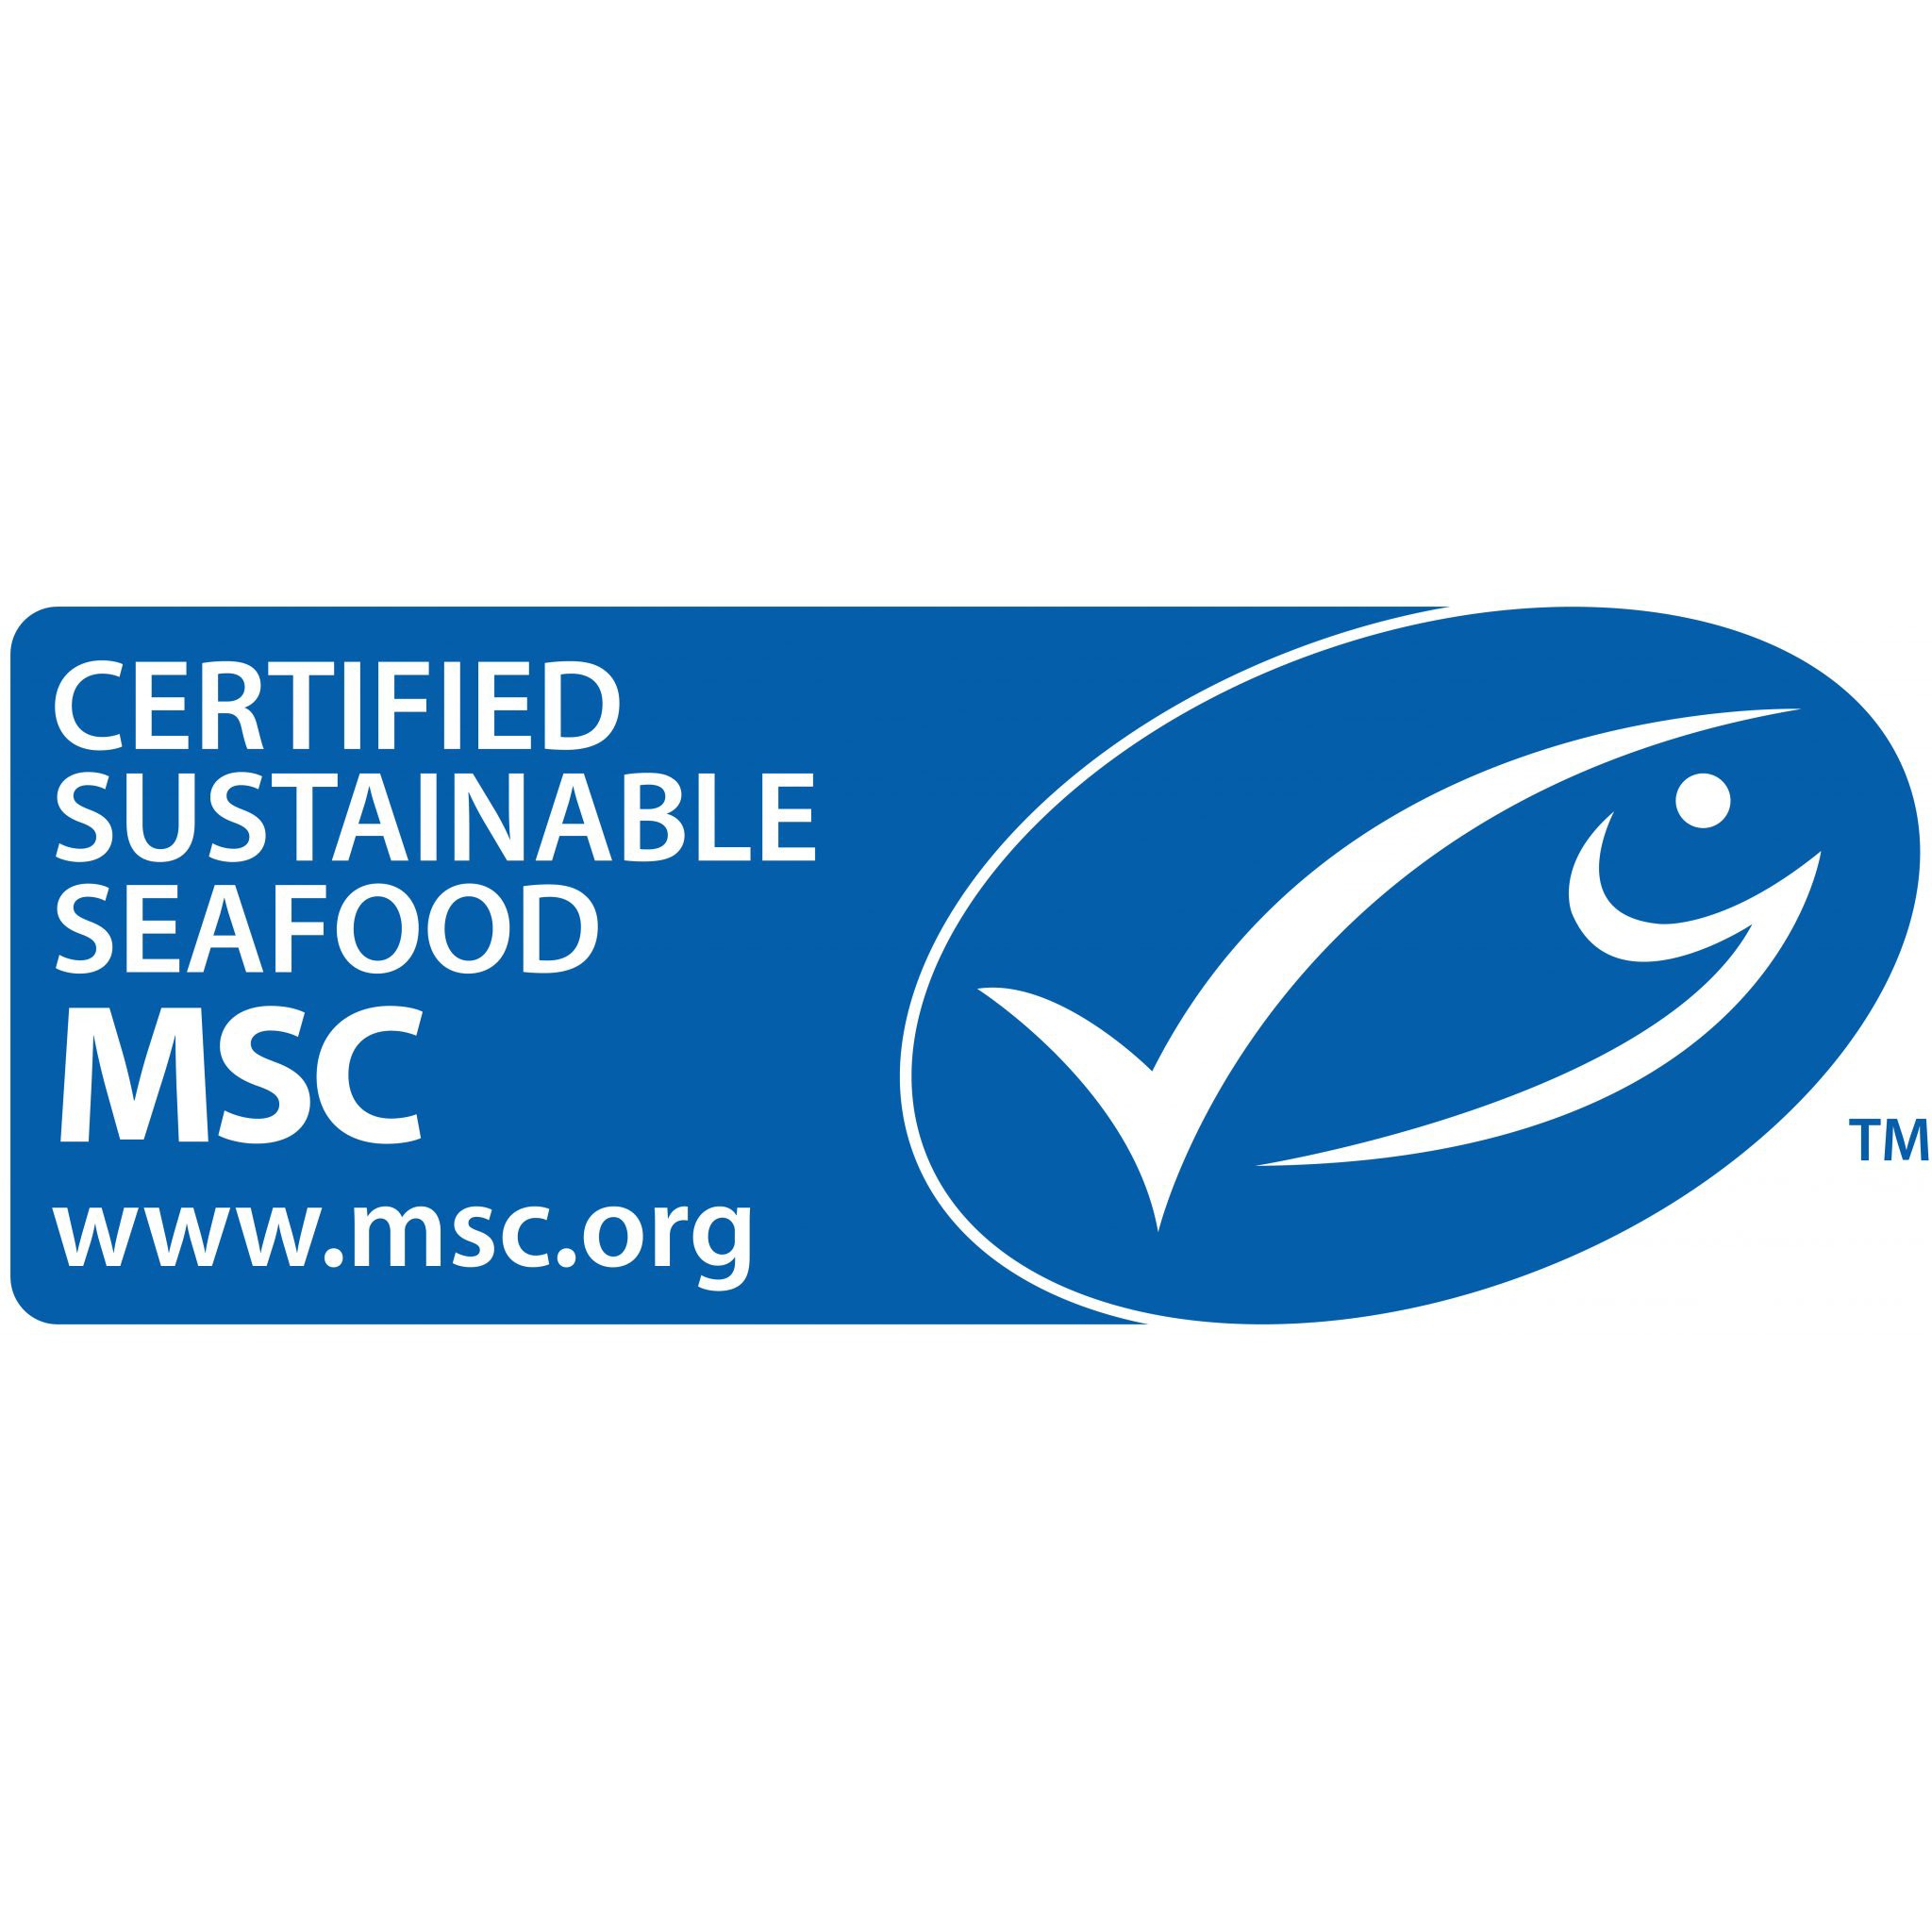 Msc_Logo_Certified_Sustainable_English-Landscape-Blue-Rgb-Msc-Web-Only-1